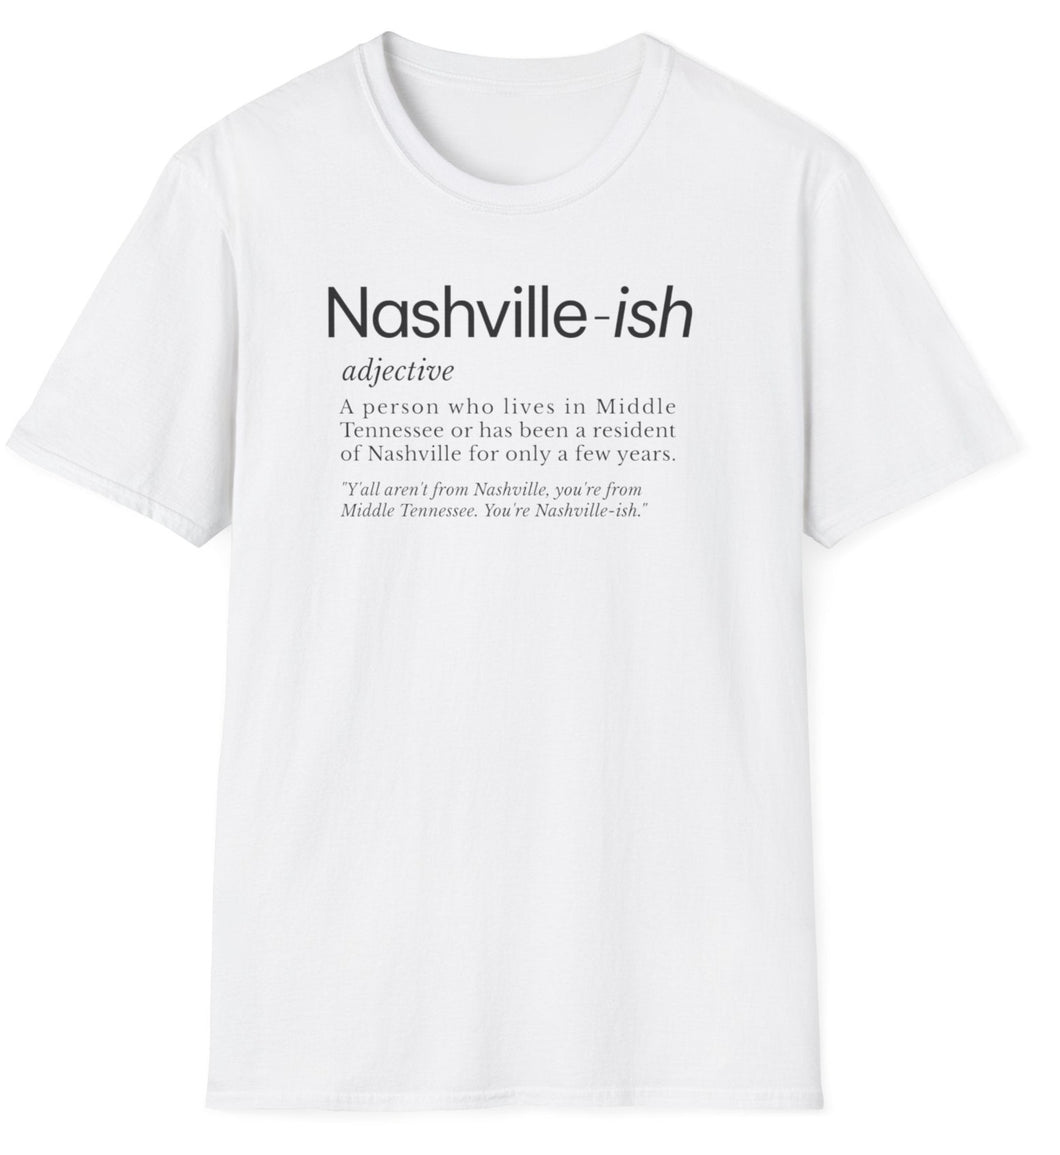 SS T-Shirt, Nashville-ish in White